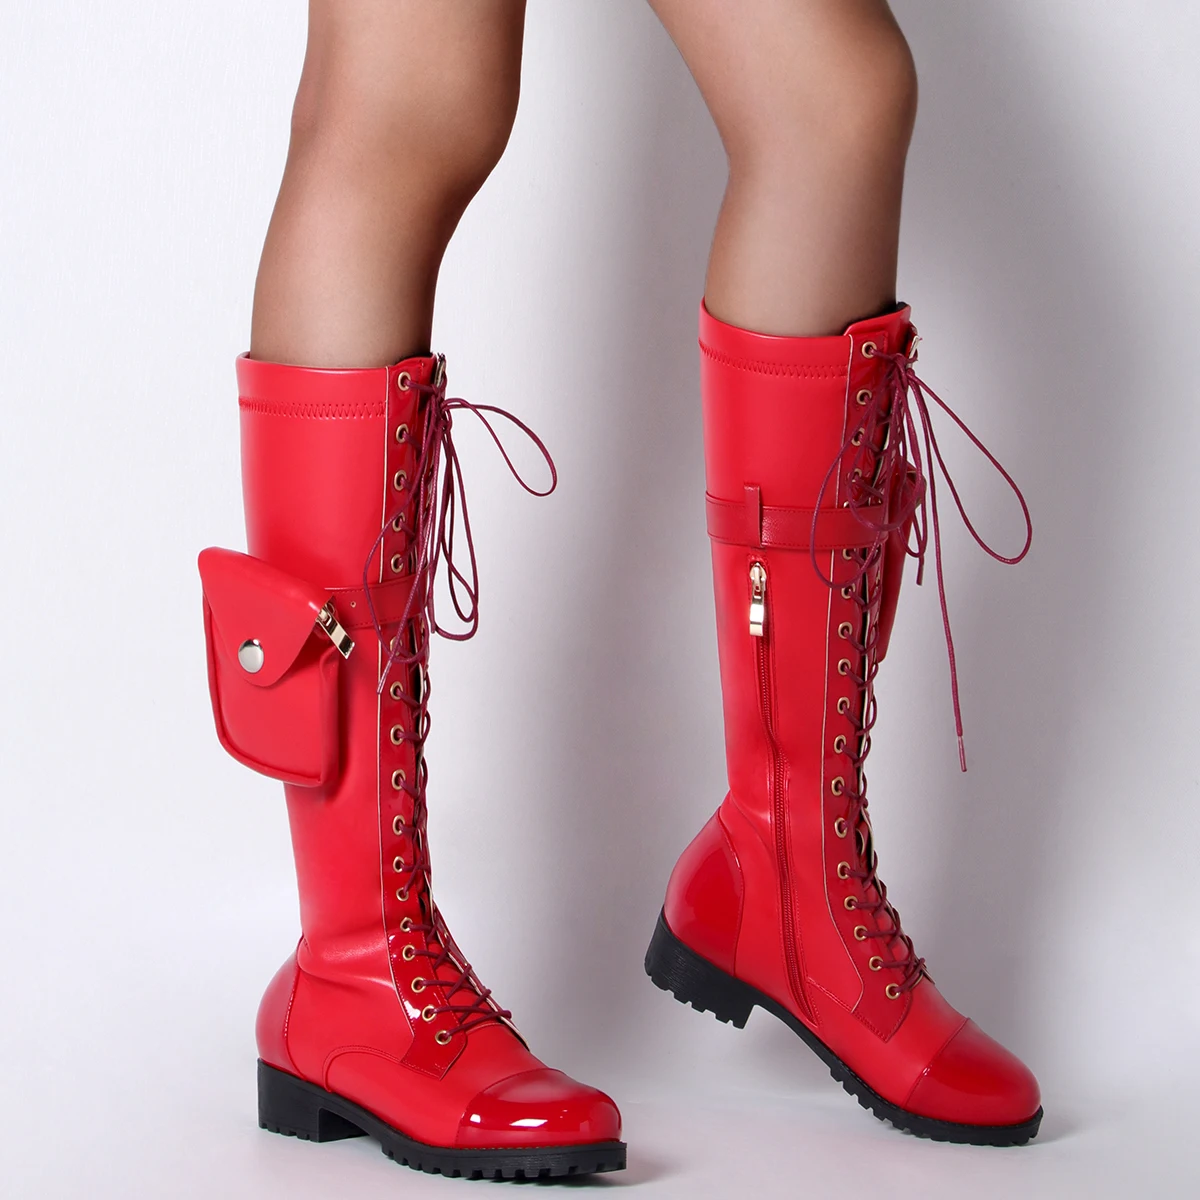 Купи Knee High Boots For Women Shoes Lace Up Zipper Low Heels Bag Women's Boots Pu Punk Fashion Red Black Ladies Shoes Botas Mujer за 1,947 рублей в магазине AliExpress